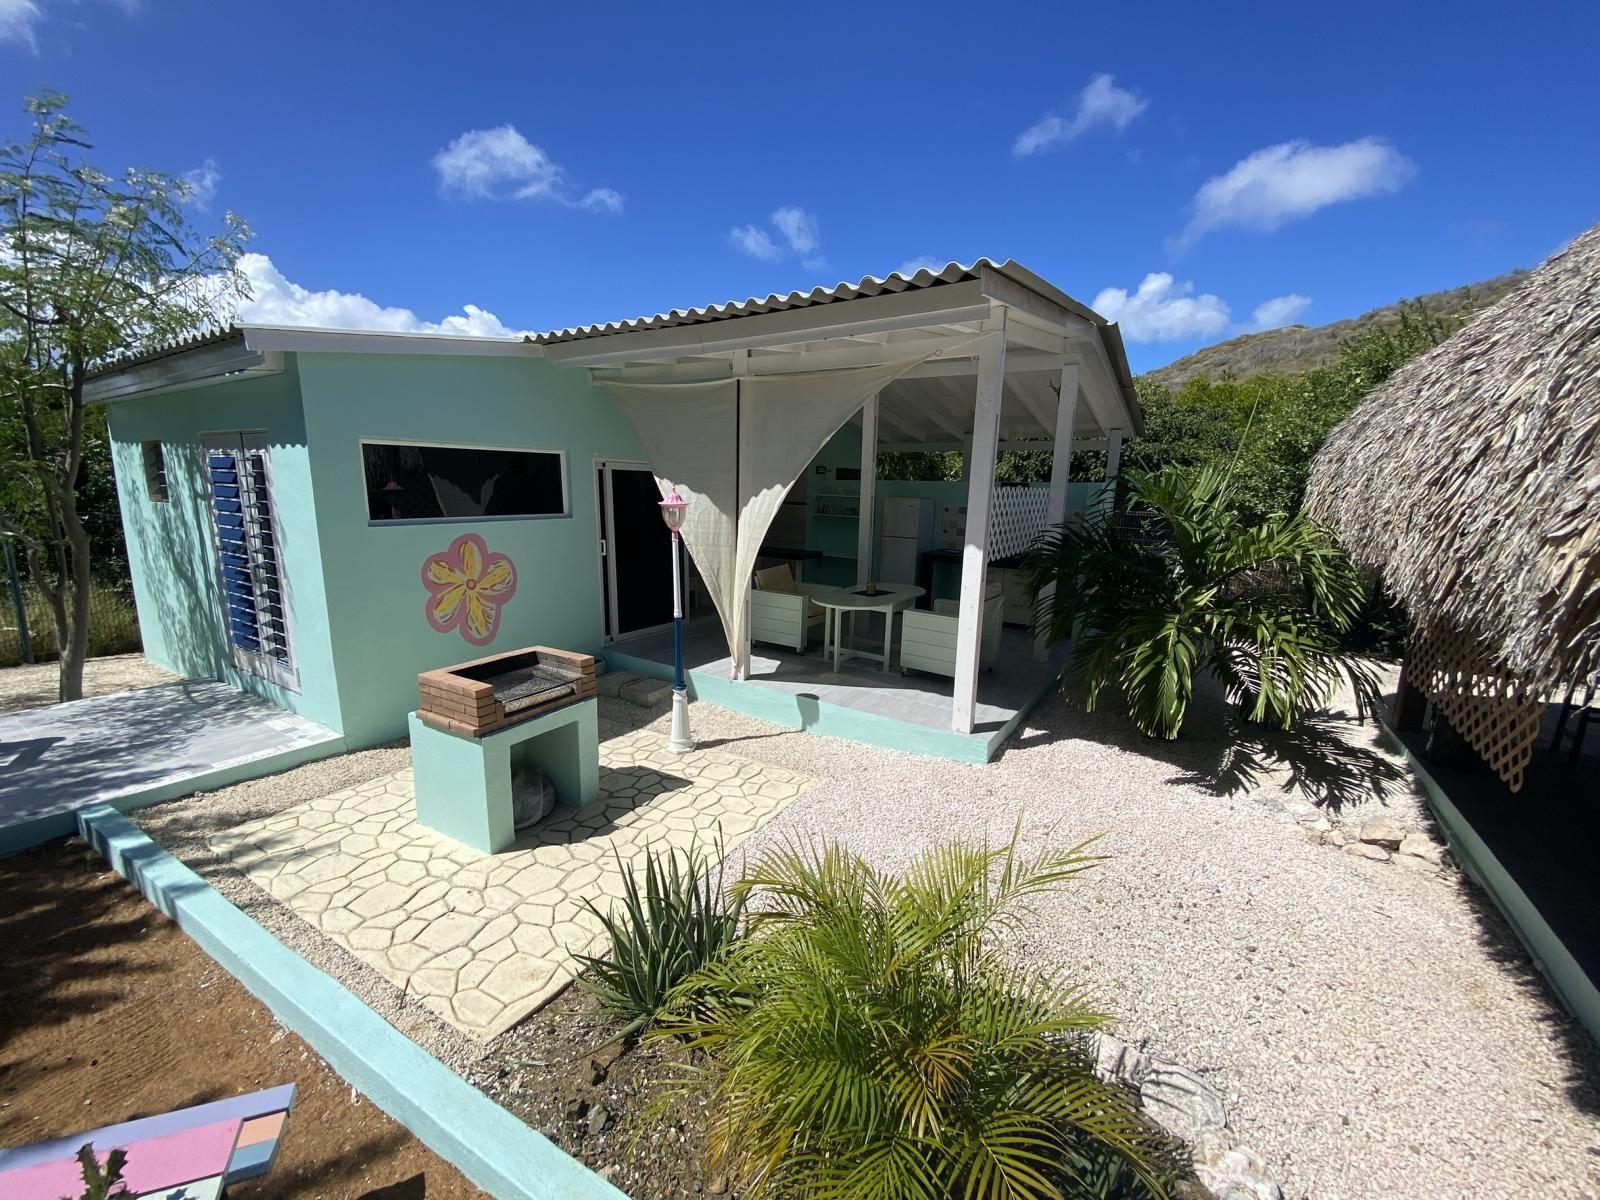 Ferienhaus in Curaçao mit Eigenem Grill  in Curacao